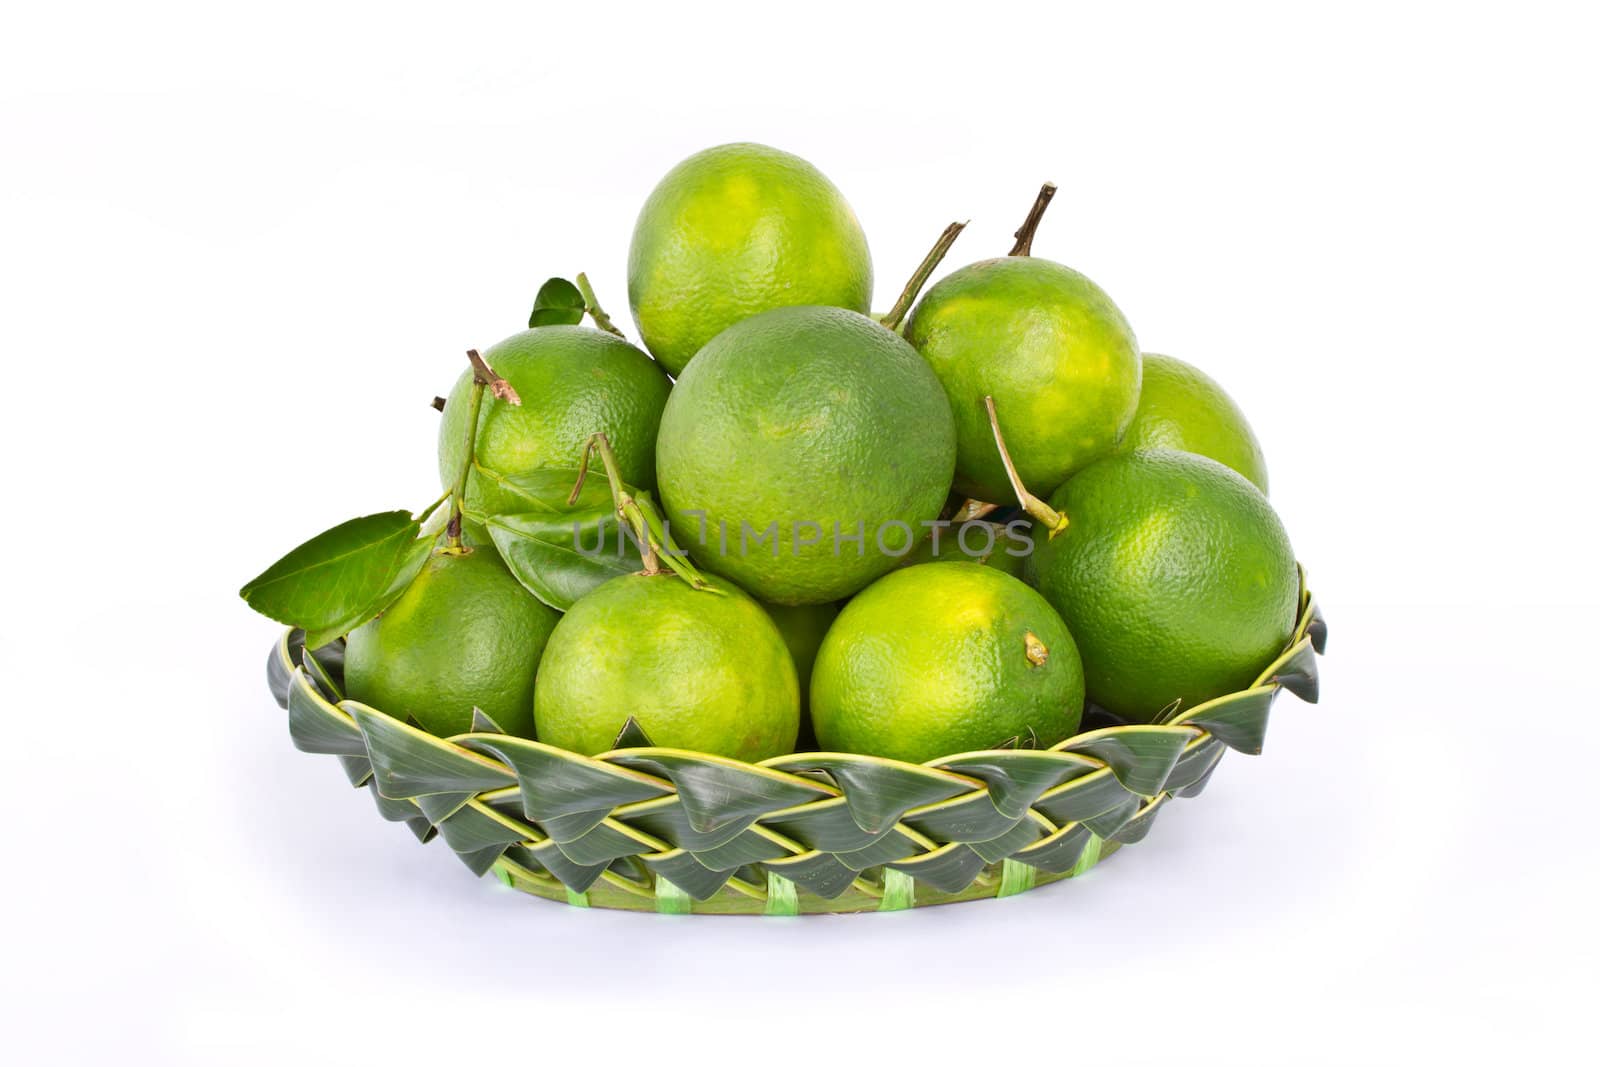 Green sweet oranges in coconut leaf basket on white background